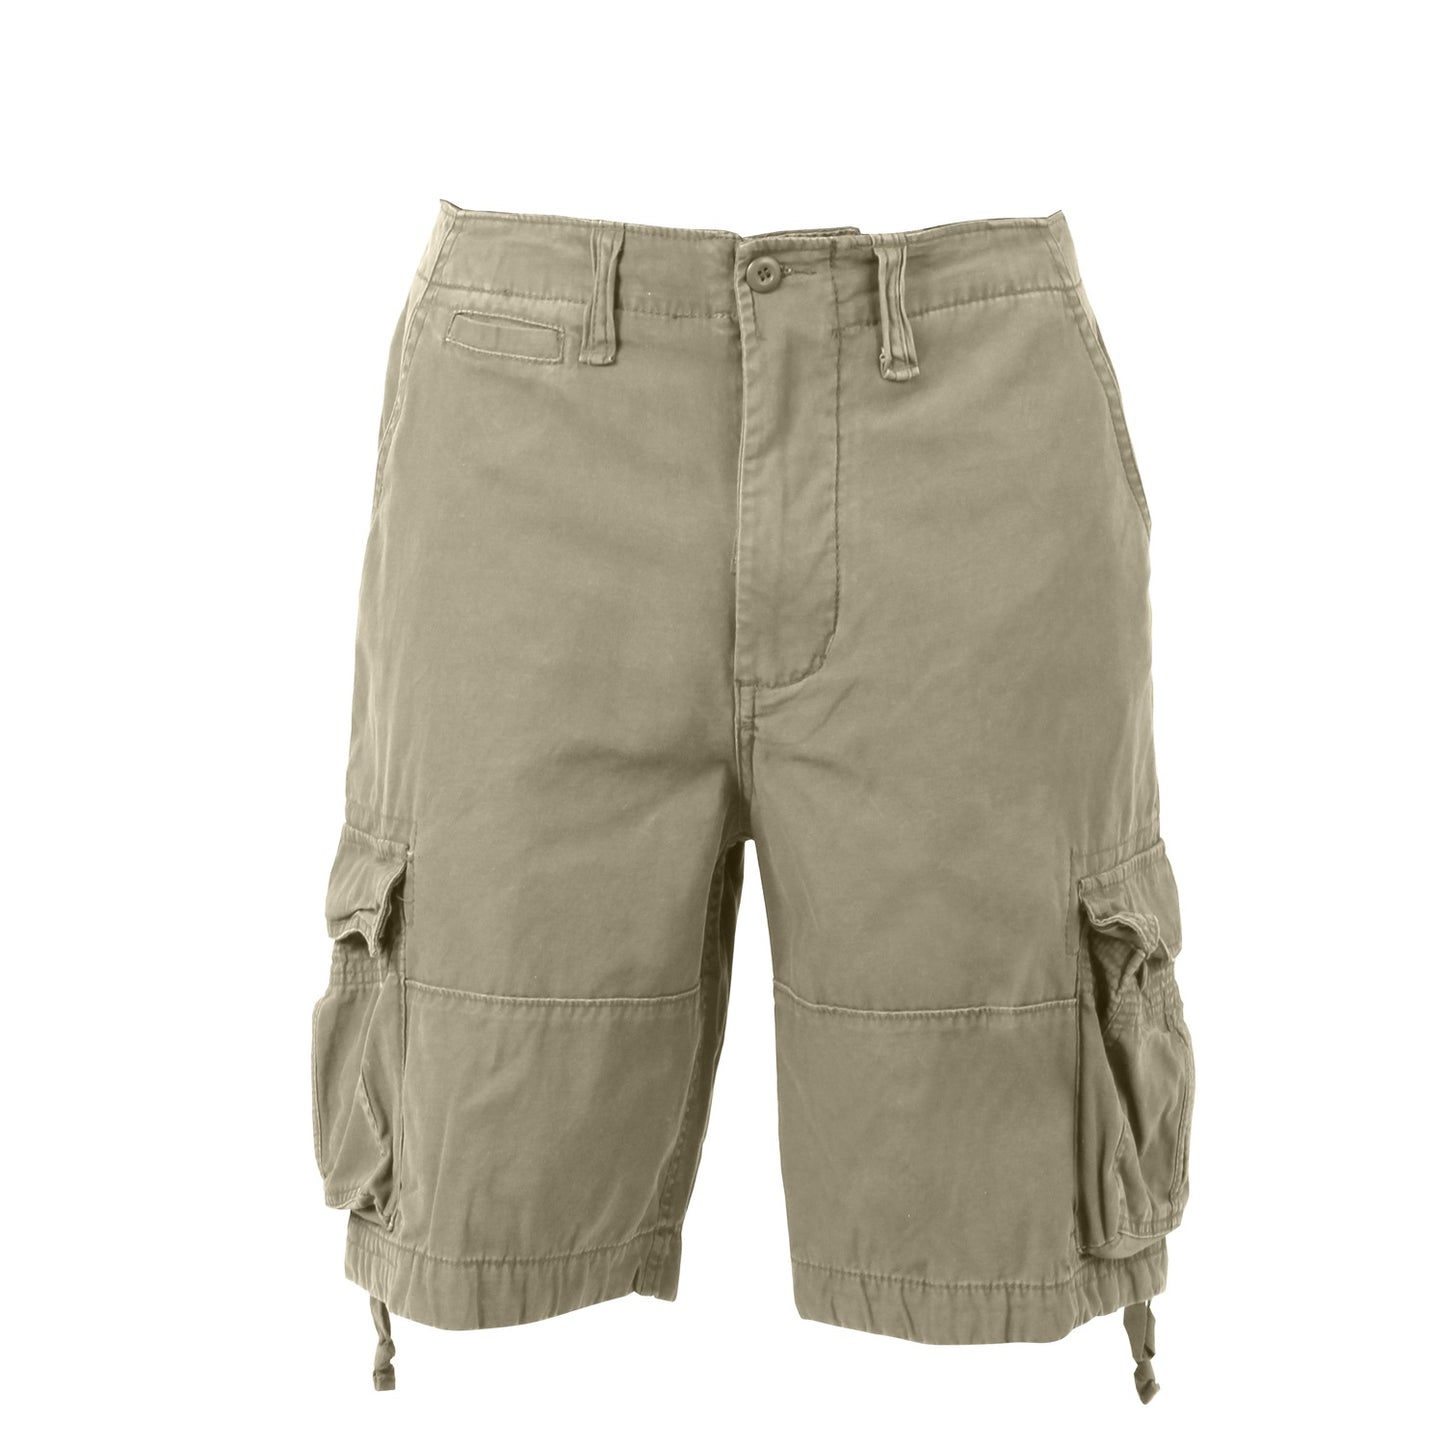 2549 - Vintage Infantry Utility Shorts